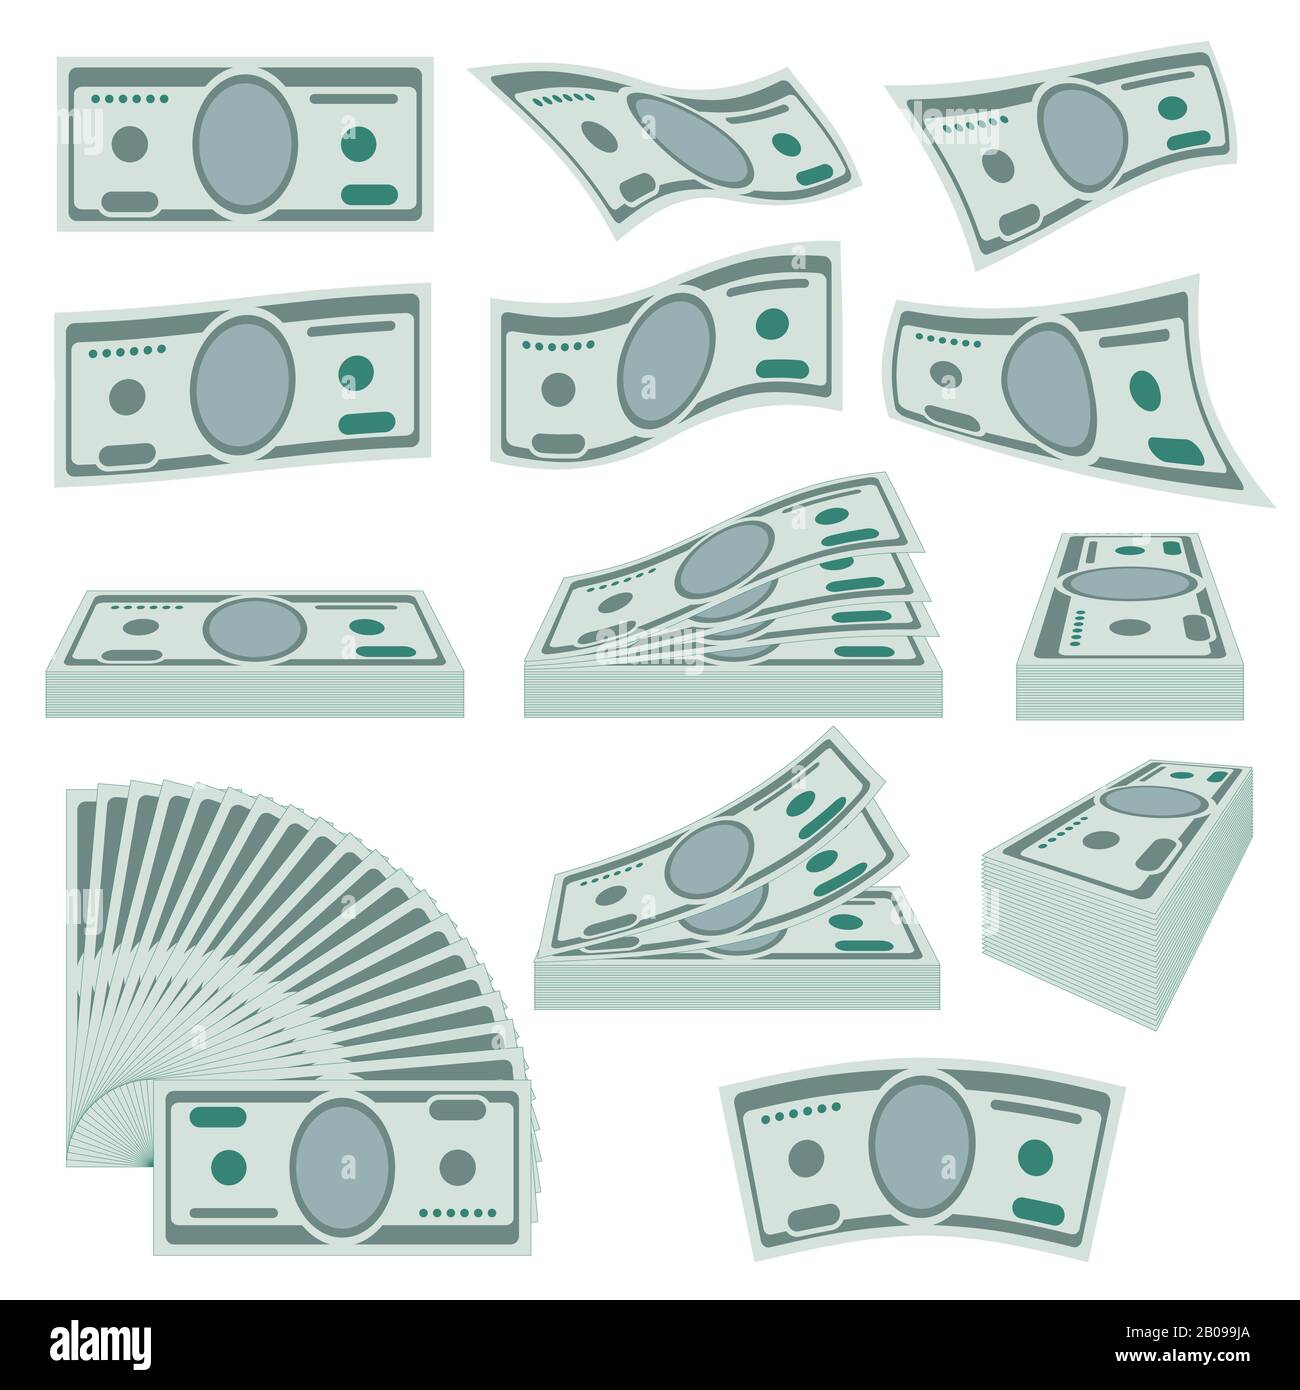 Us dollars, money stacks vector set. Banknote money paper, illustration finance currency cash money Stock Vector